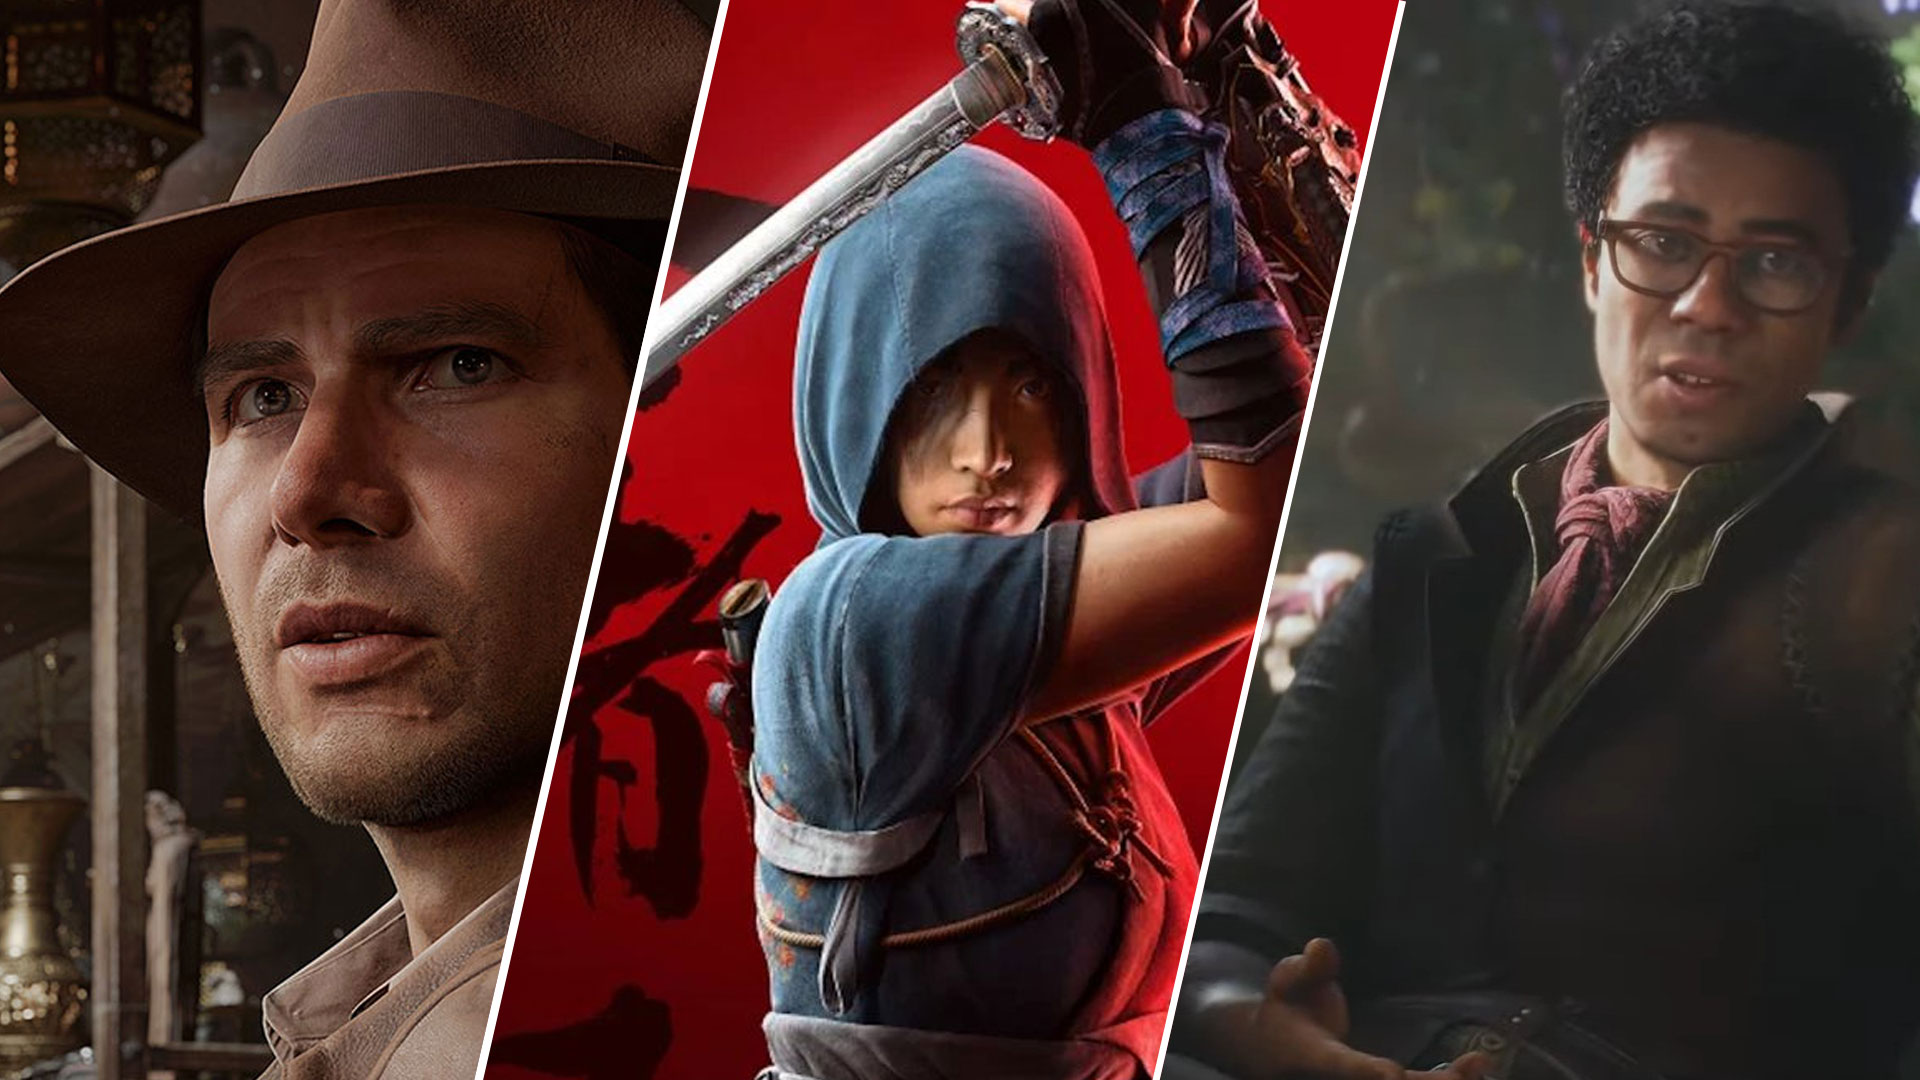 Indiana Jones et le Grand Cercle, Assassin's Creed Shadows et Fable